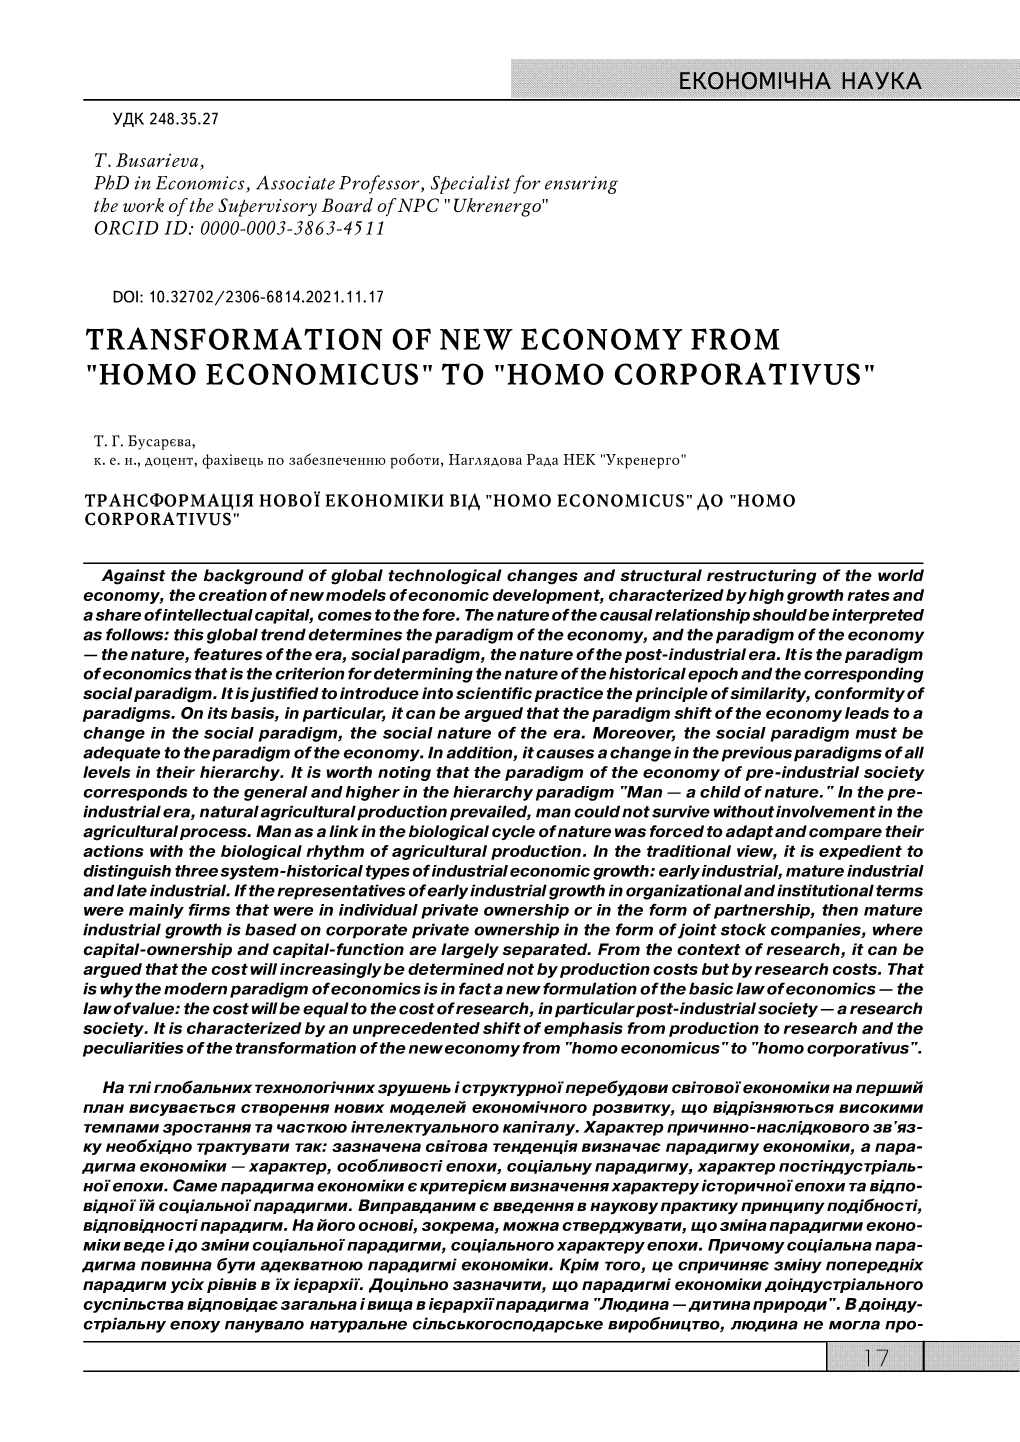 Transformation of New Economy From" Homo Economicus" To" Homo